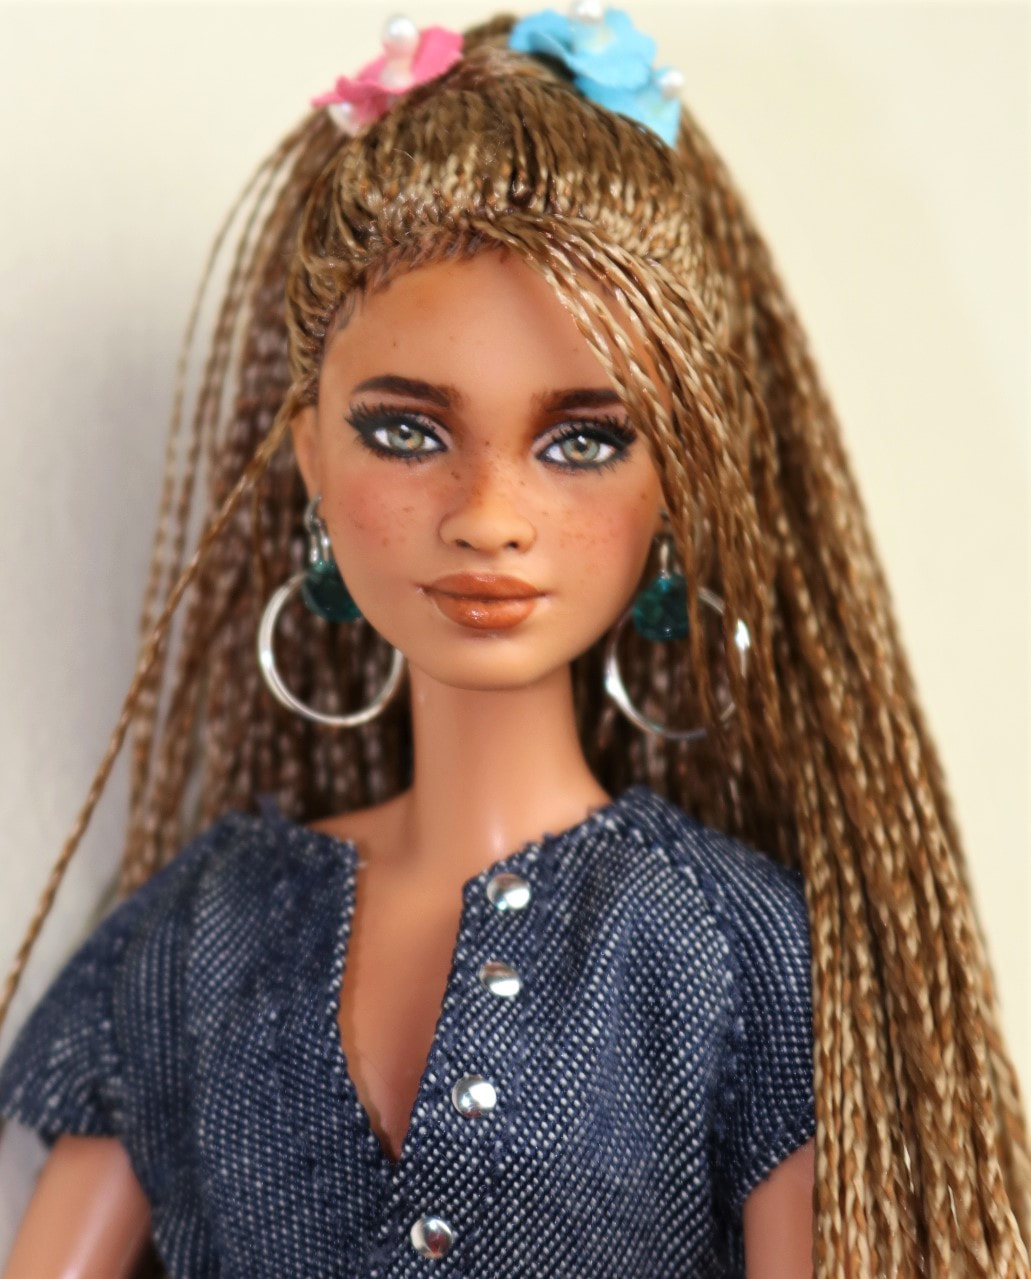 Aa Biracial Barbie Doll Repaint Ooak